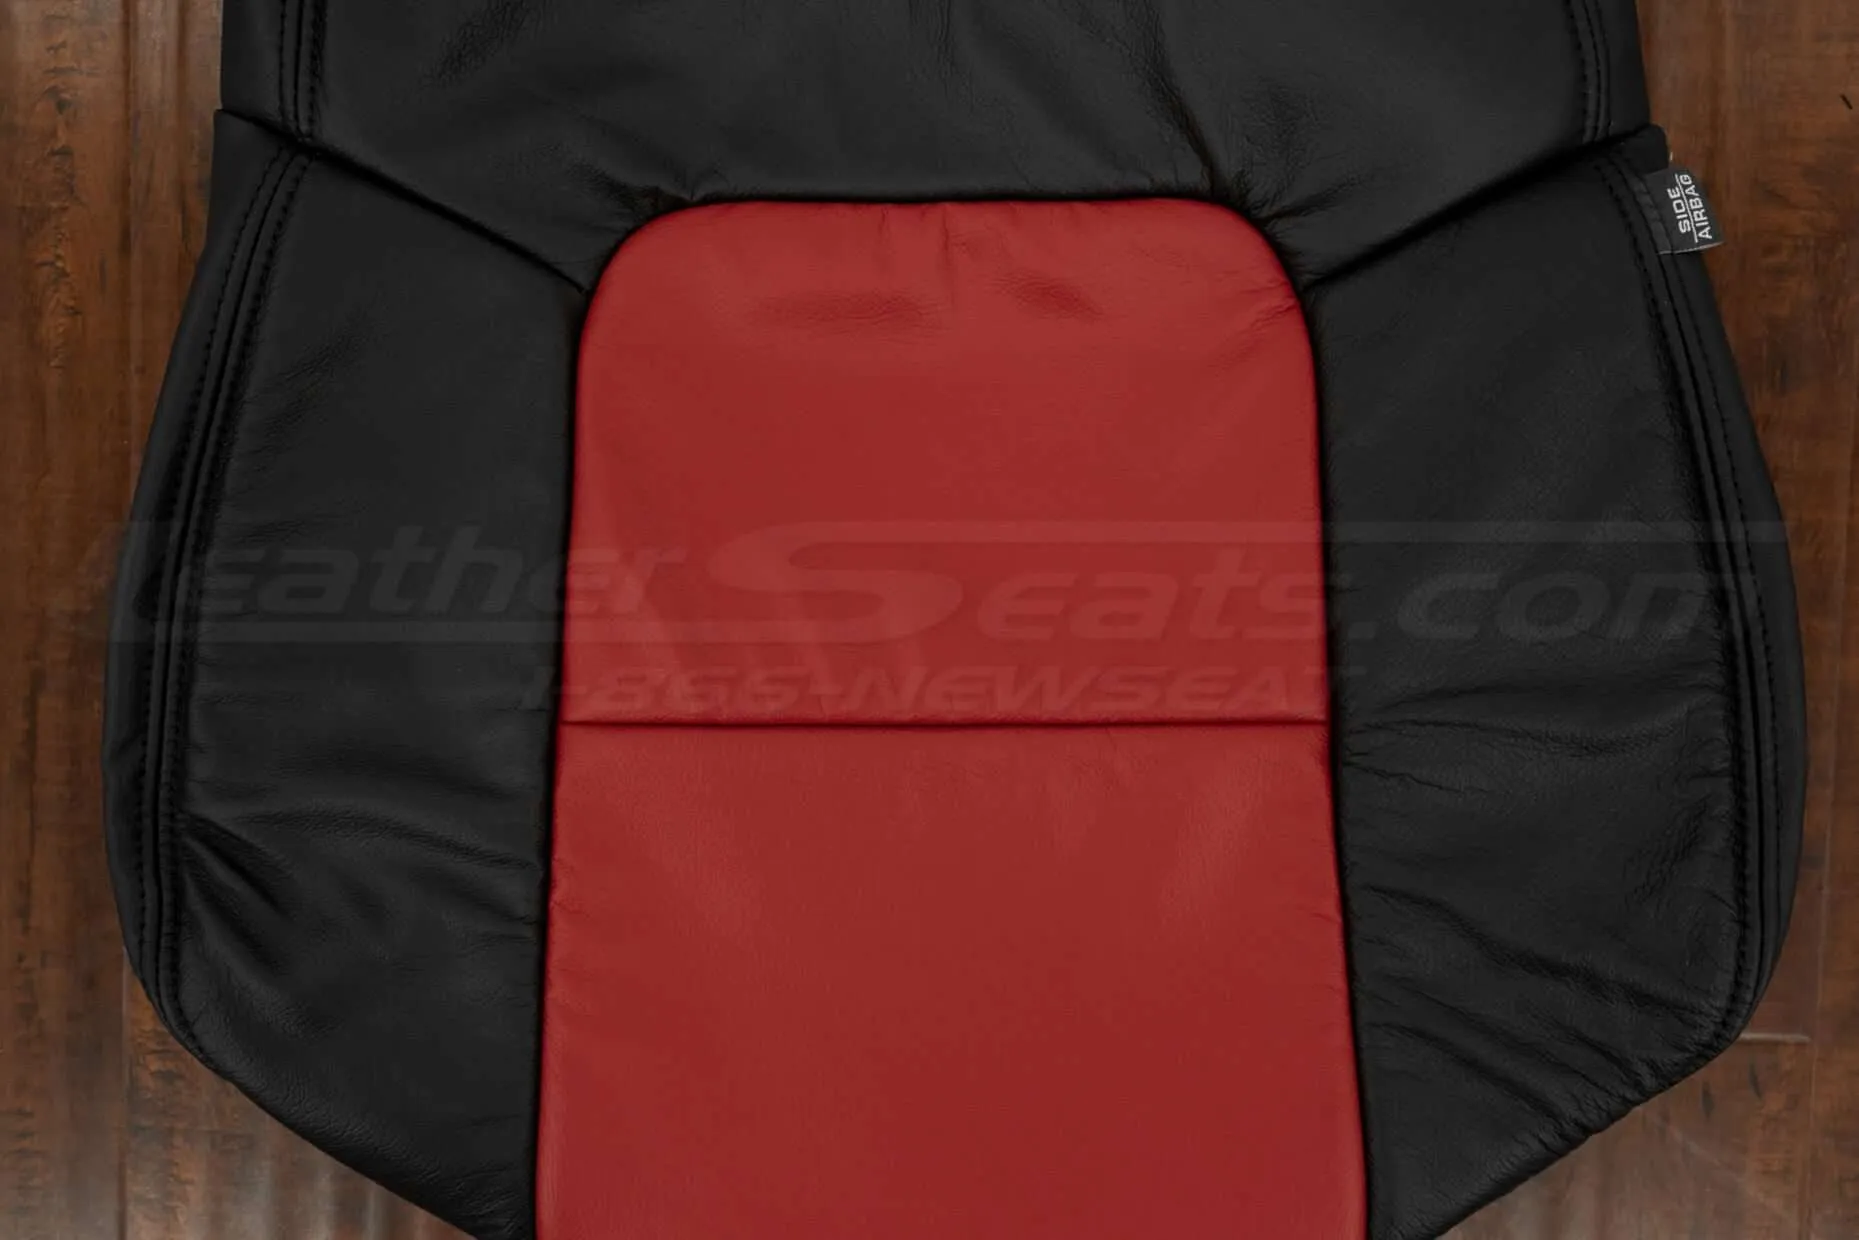 Pontiac G8 Leather Kit - Black & Red - Backrest red inserts